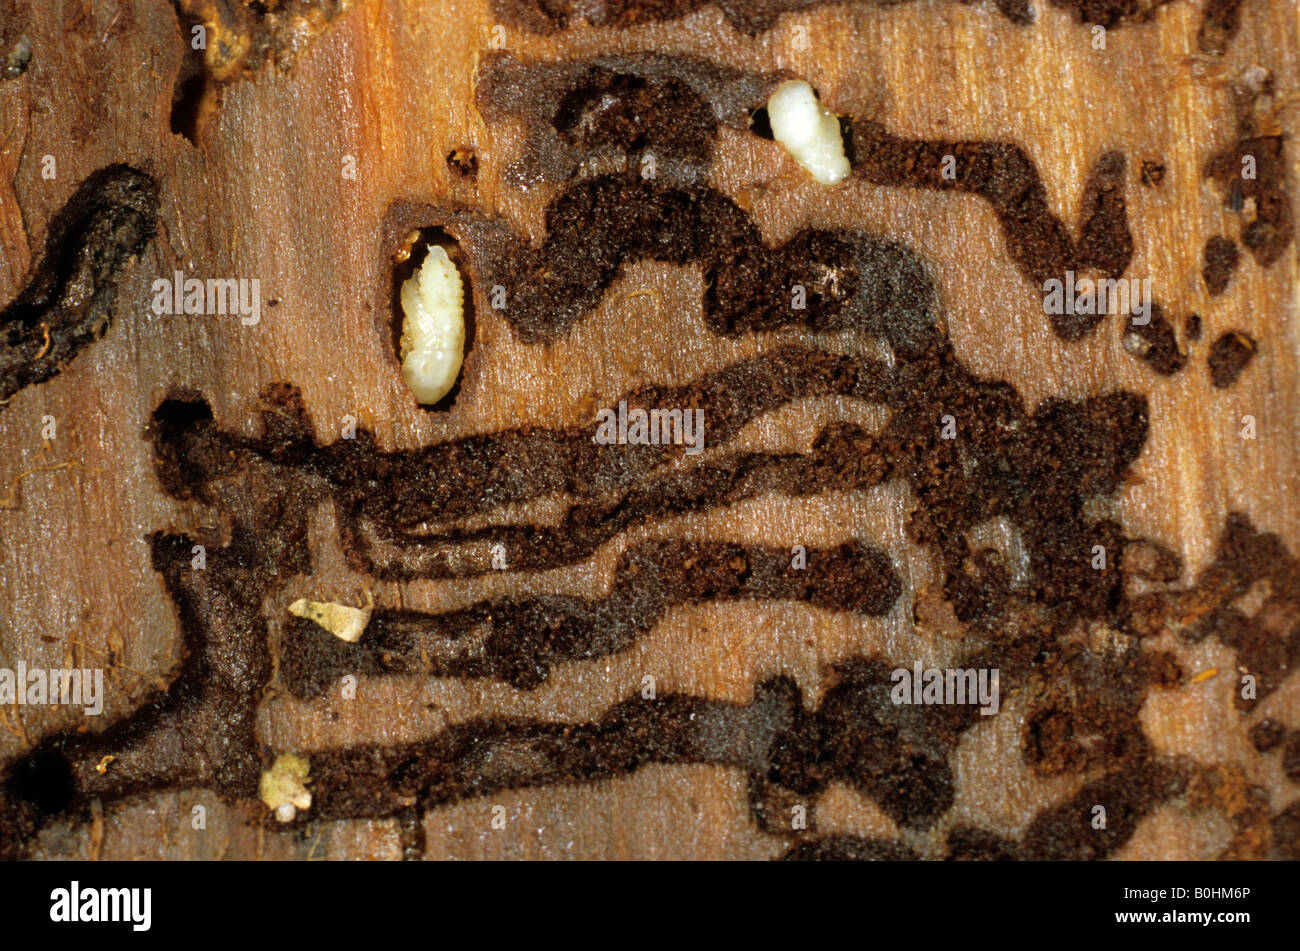 European Spruce Bark Beetle larvae (Ips typographus) at the end of tunnels eaten through wood Stock Photo